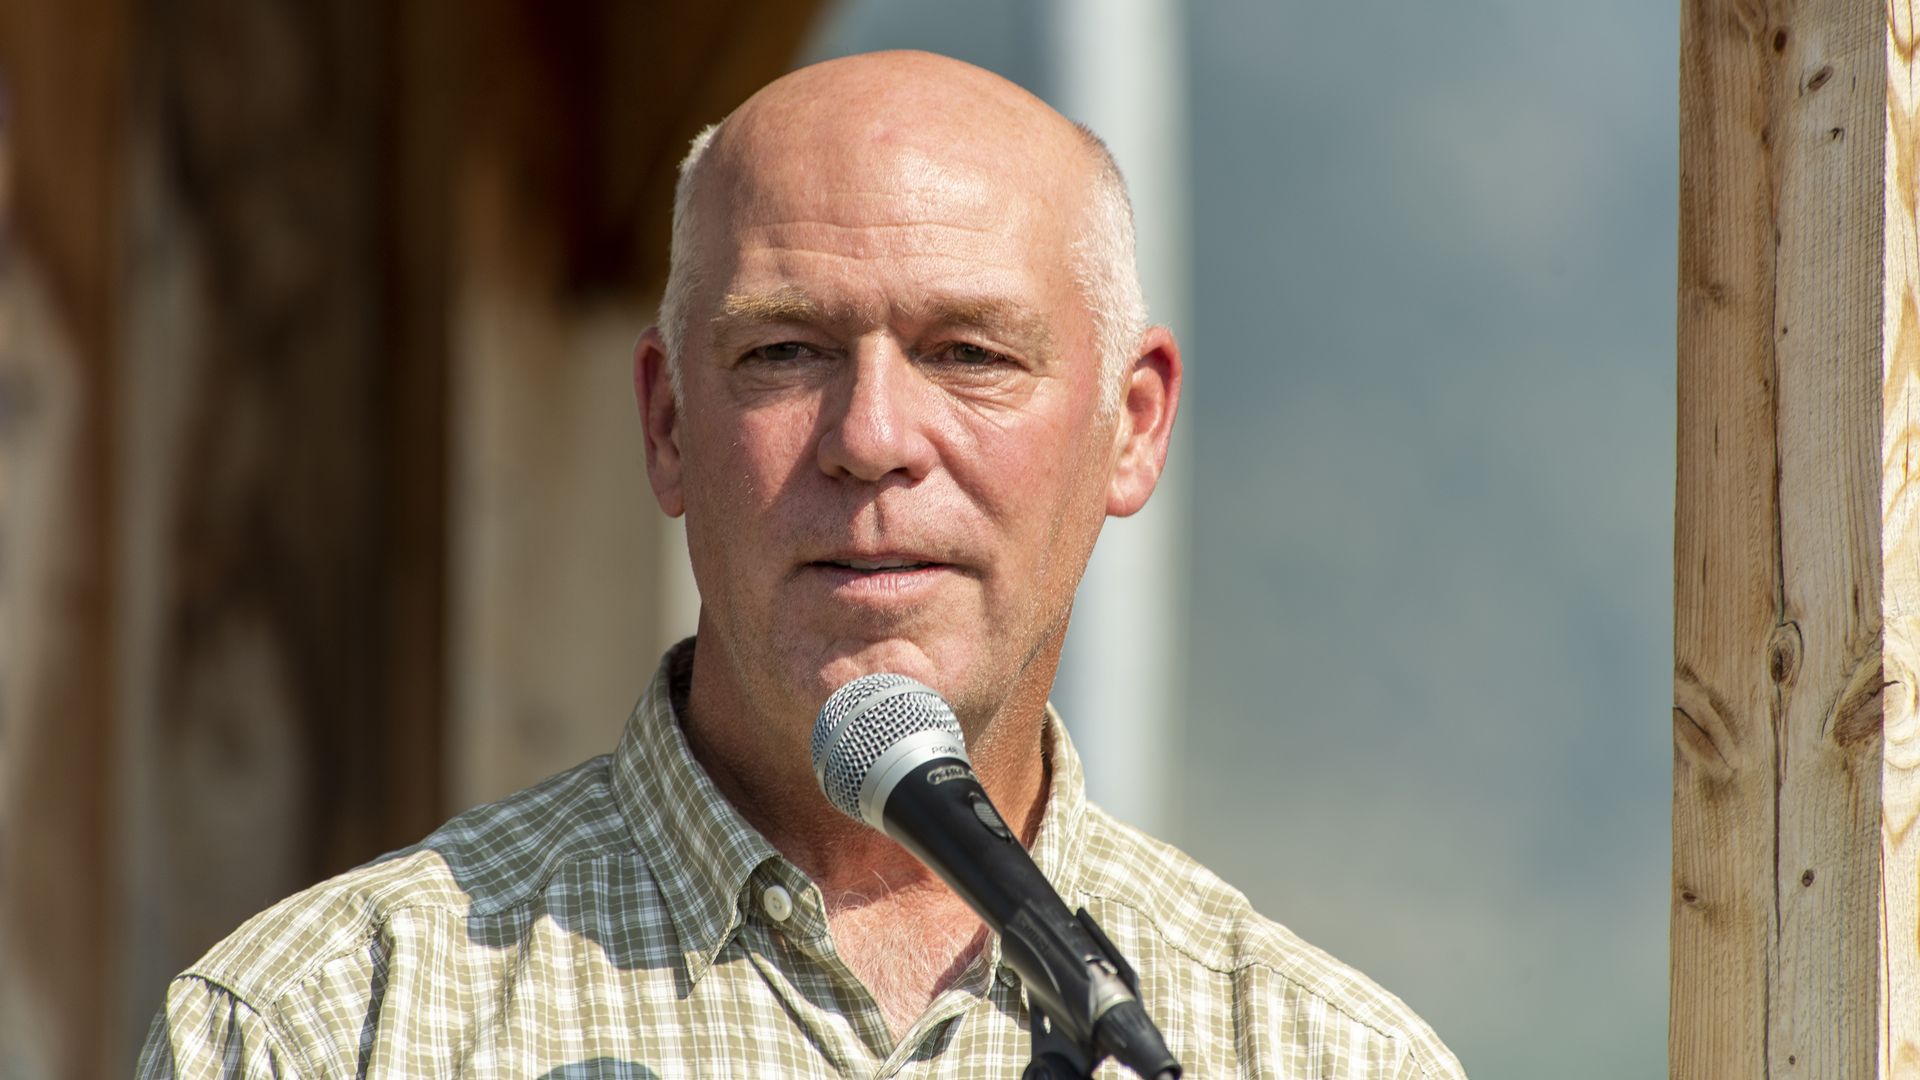  Montana Gov. Greg Gianforte speaking in the town of Emigrant in July 2021.